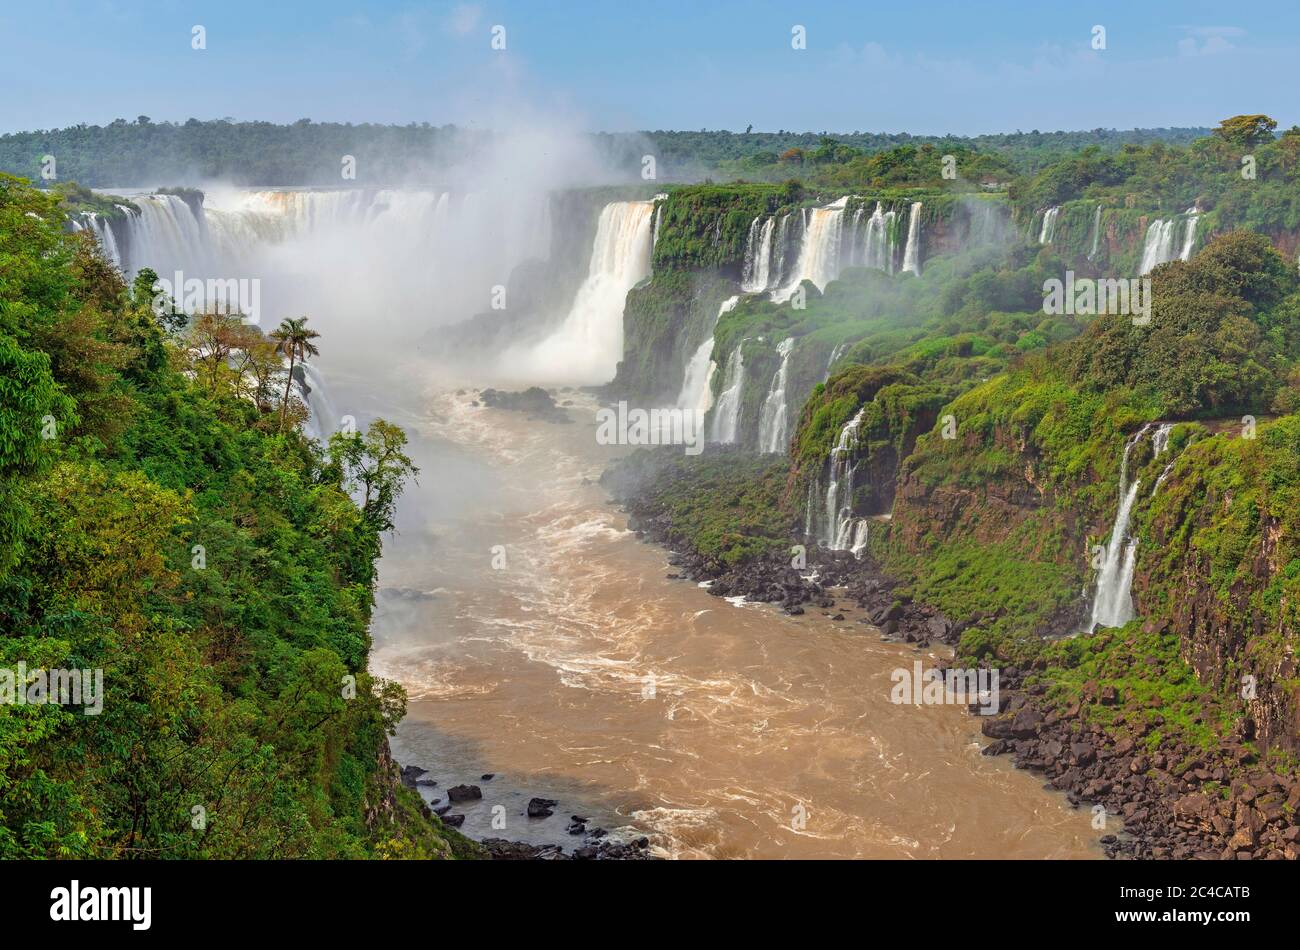 Vista aérea del paisaje sobre las Cataratas del Iguazú (Iguazú en portugués) y la selva tropical, Brasil. Foto de stock